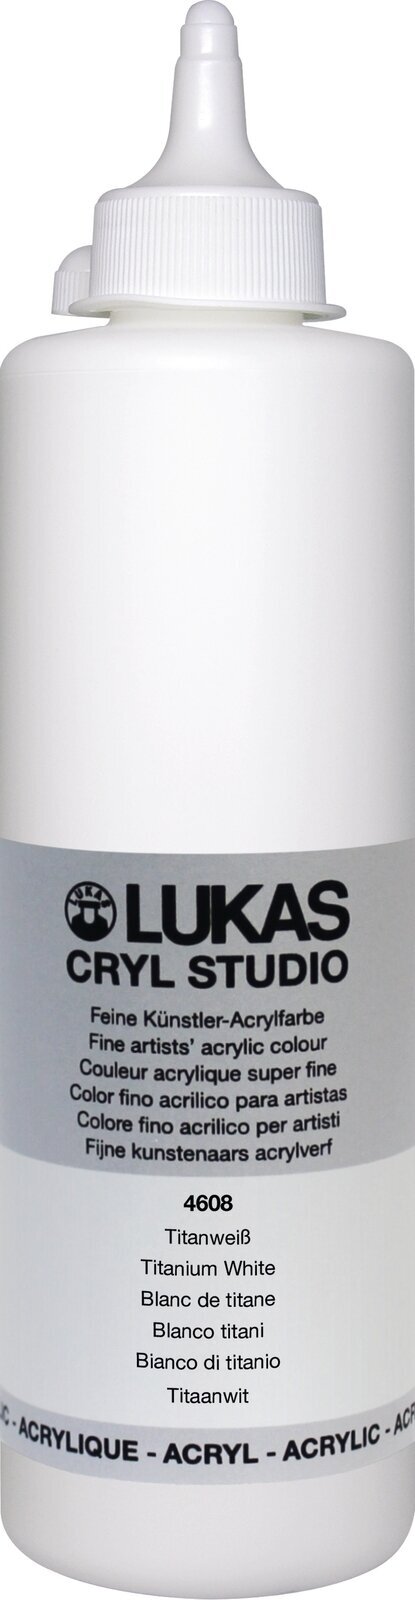 Pintura acrílica Lukas Cryl Studio Plastic Bottle Acrylic Paint Titanium White 500 ml 1 pc